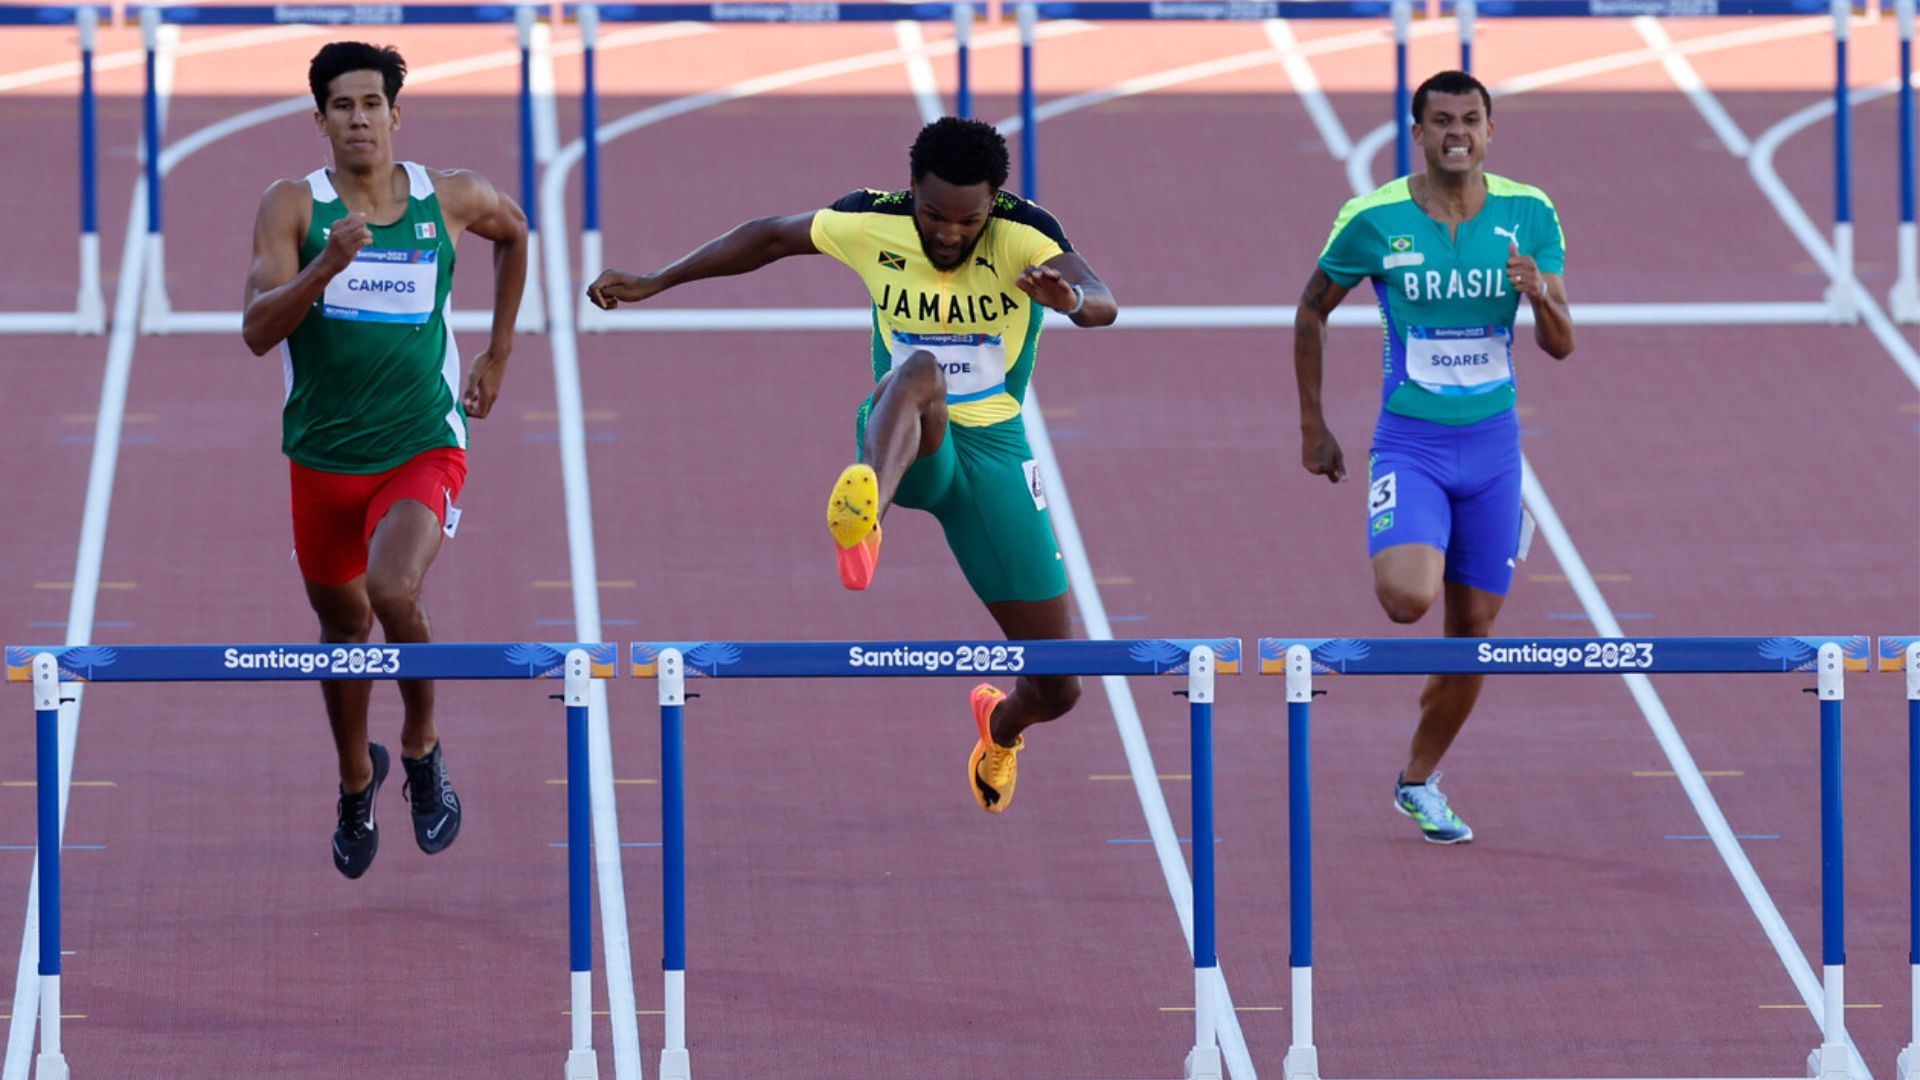 Jaheel Hyde Secures Jamaica's First Medal